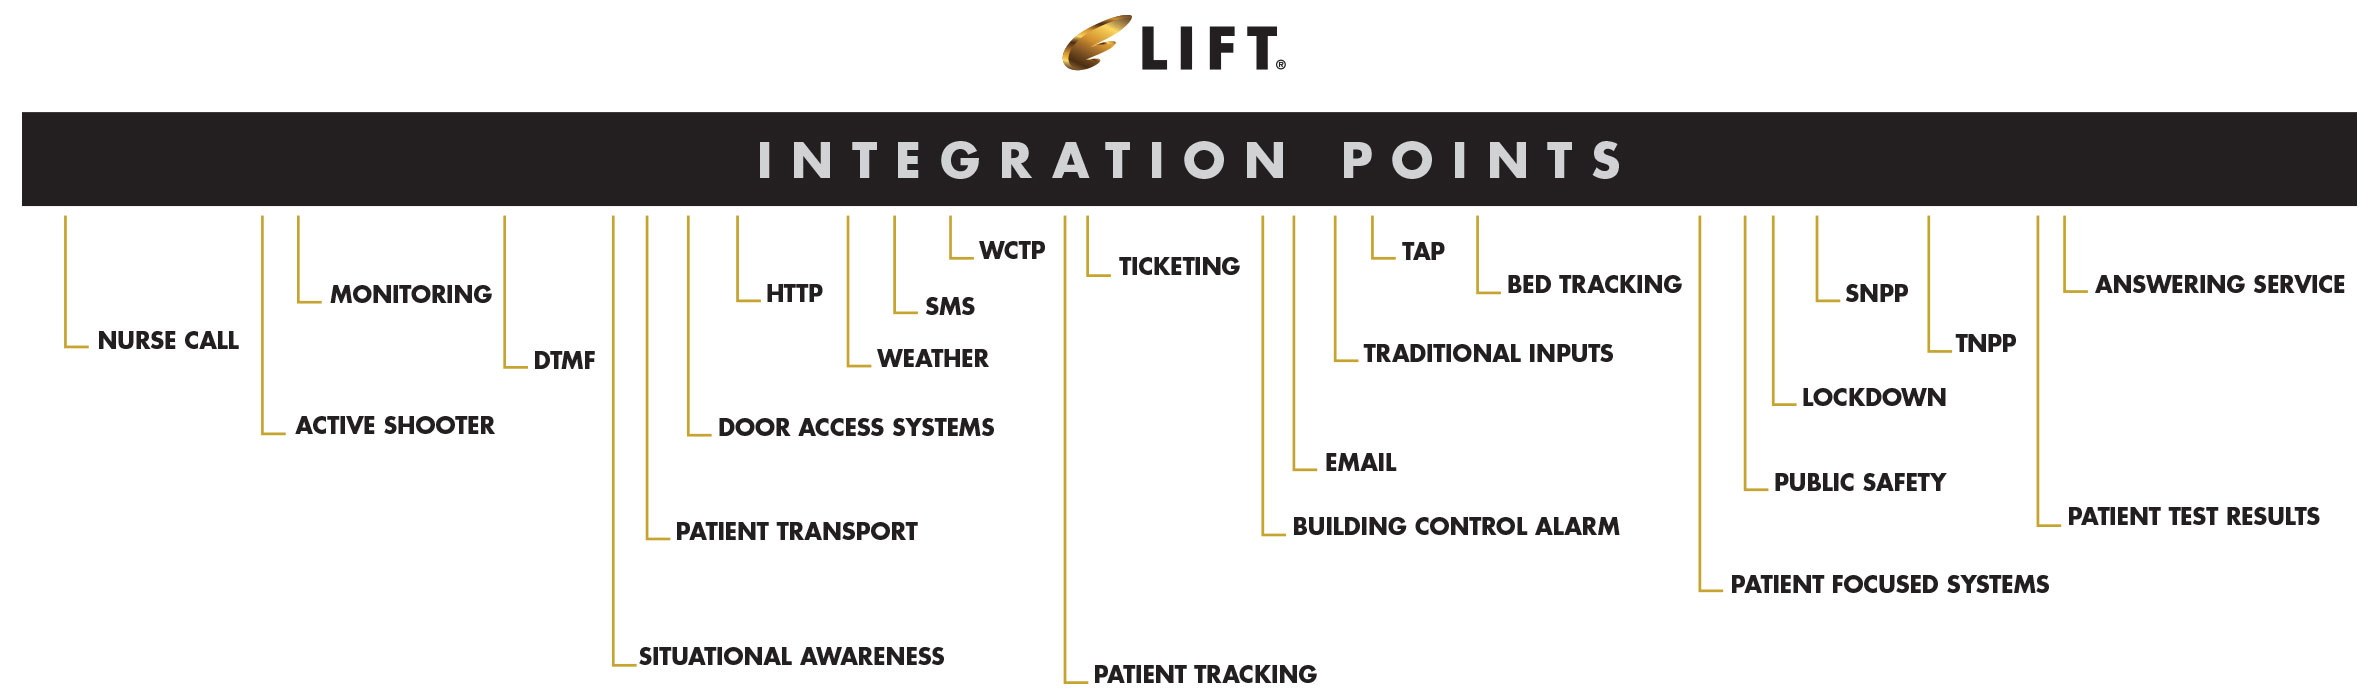 Lift Integration Points